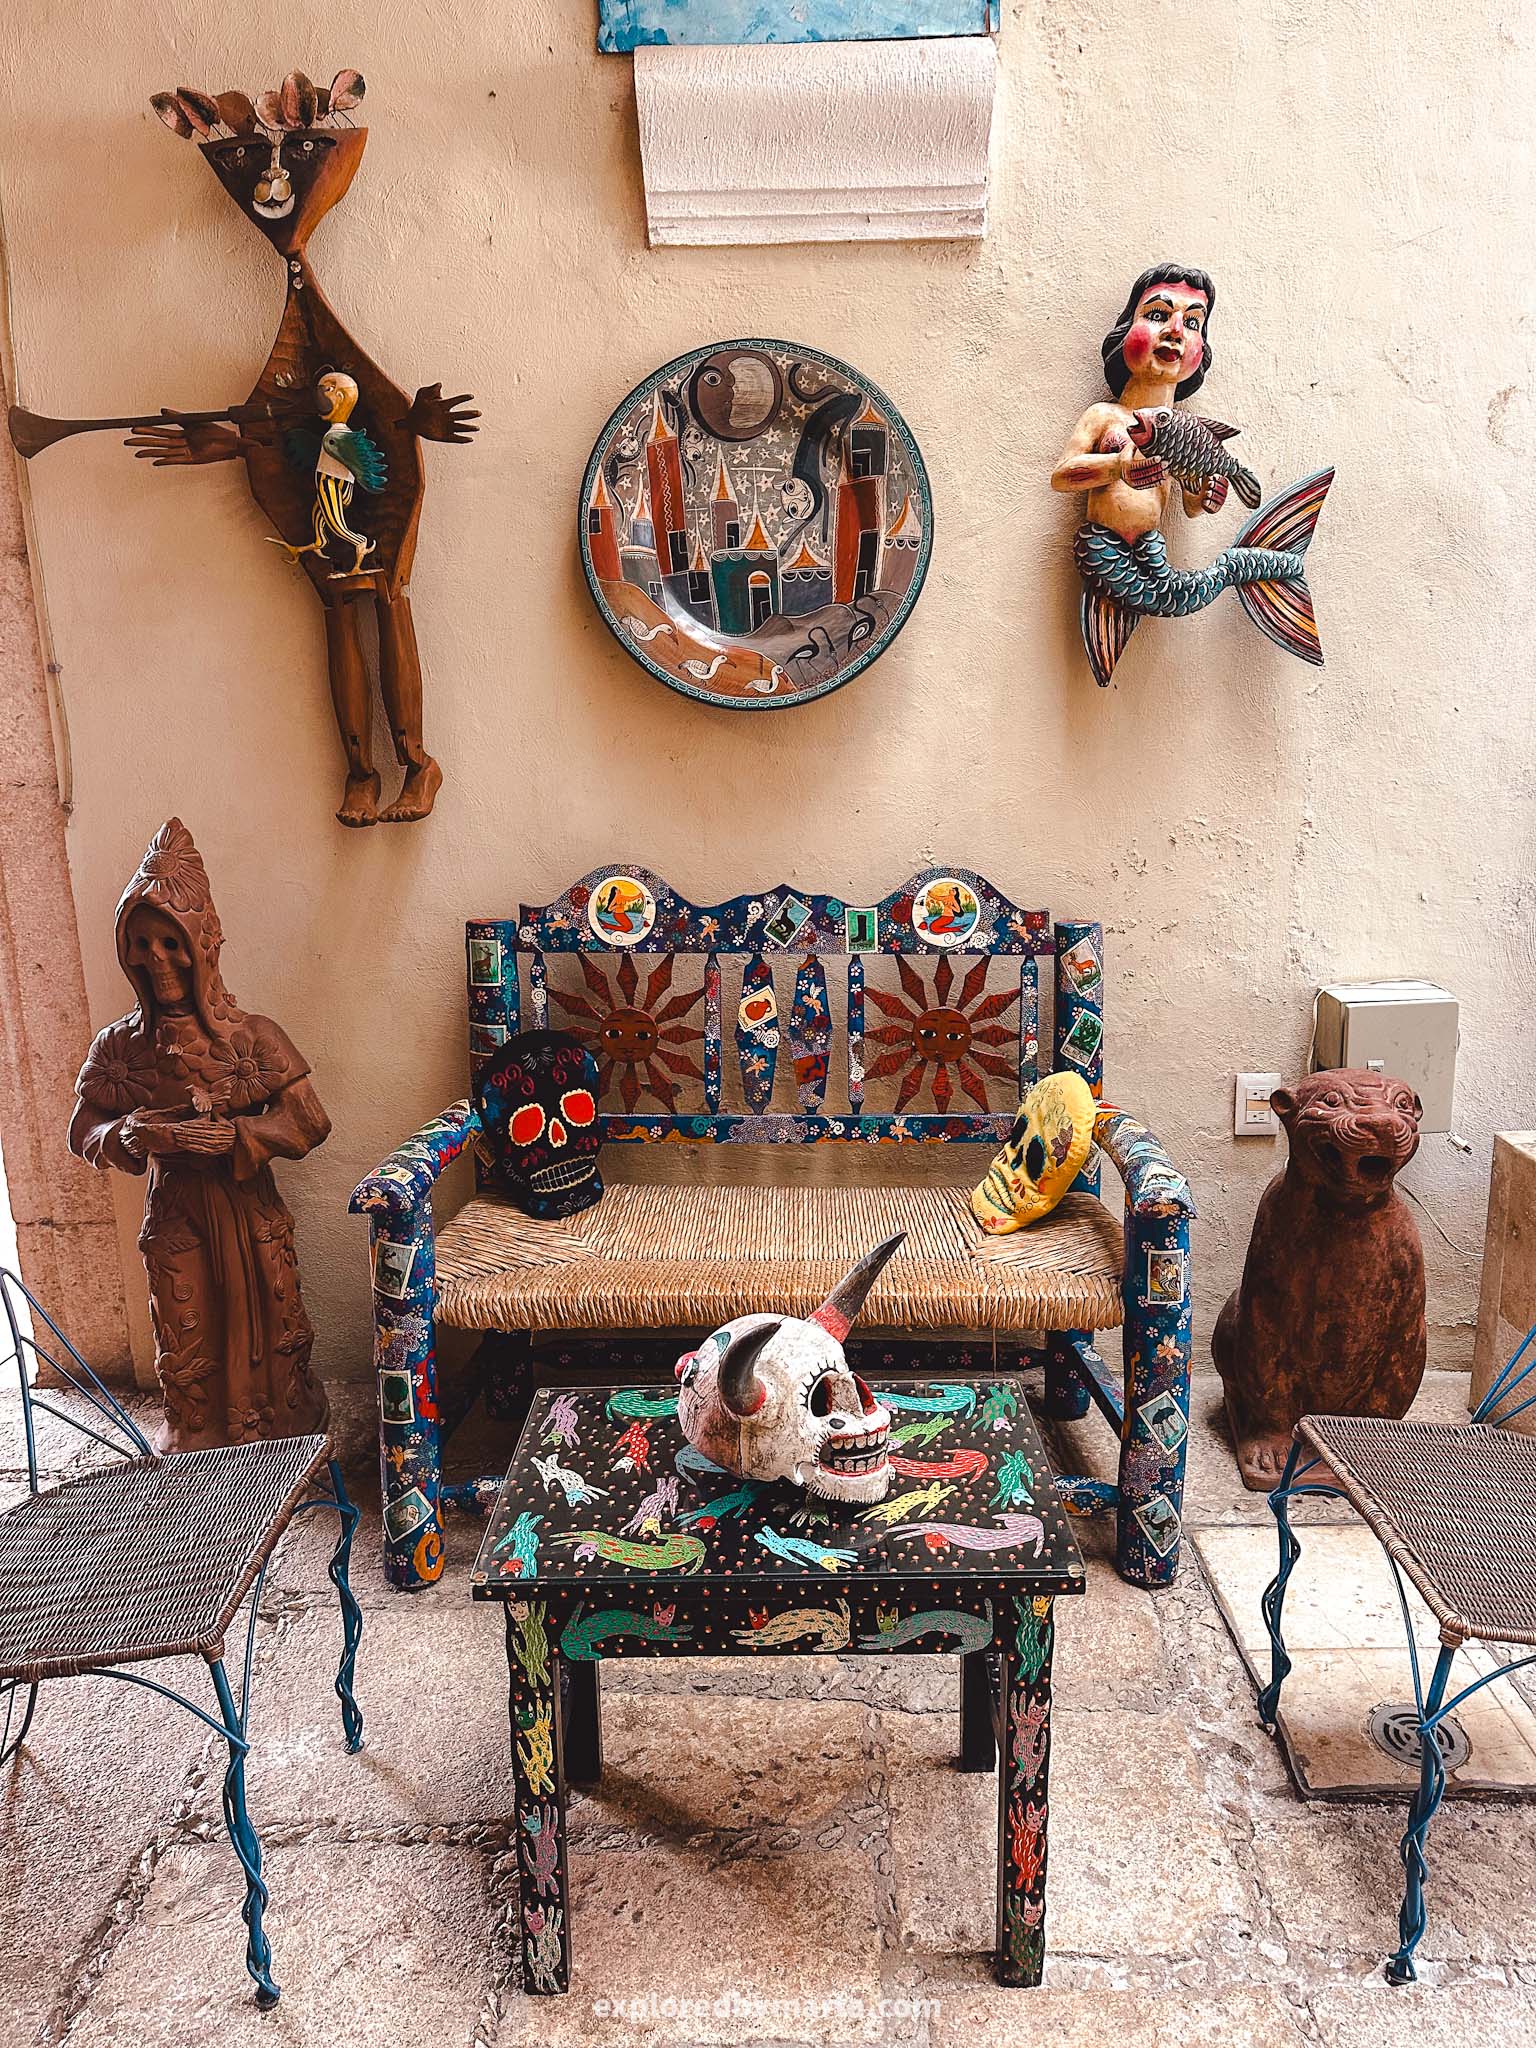 Valladolid, Mexico-Casa de los Venados museum in a private home in Valladolid featuring Mexical folk art objects